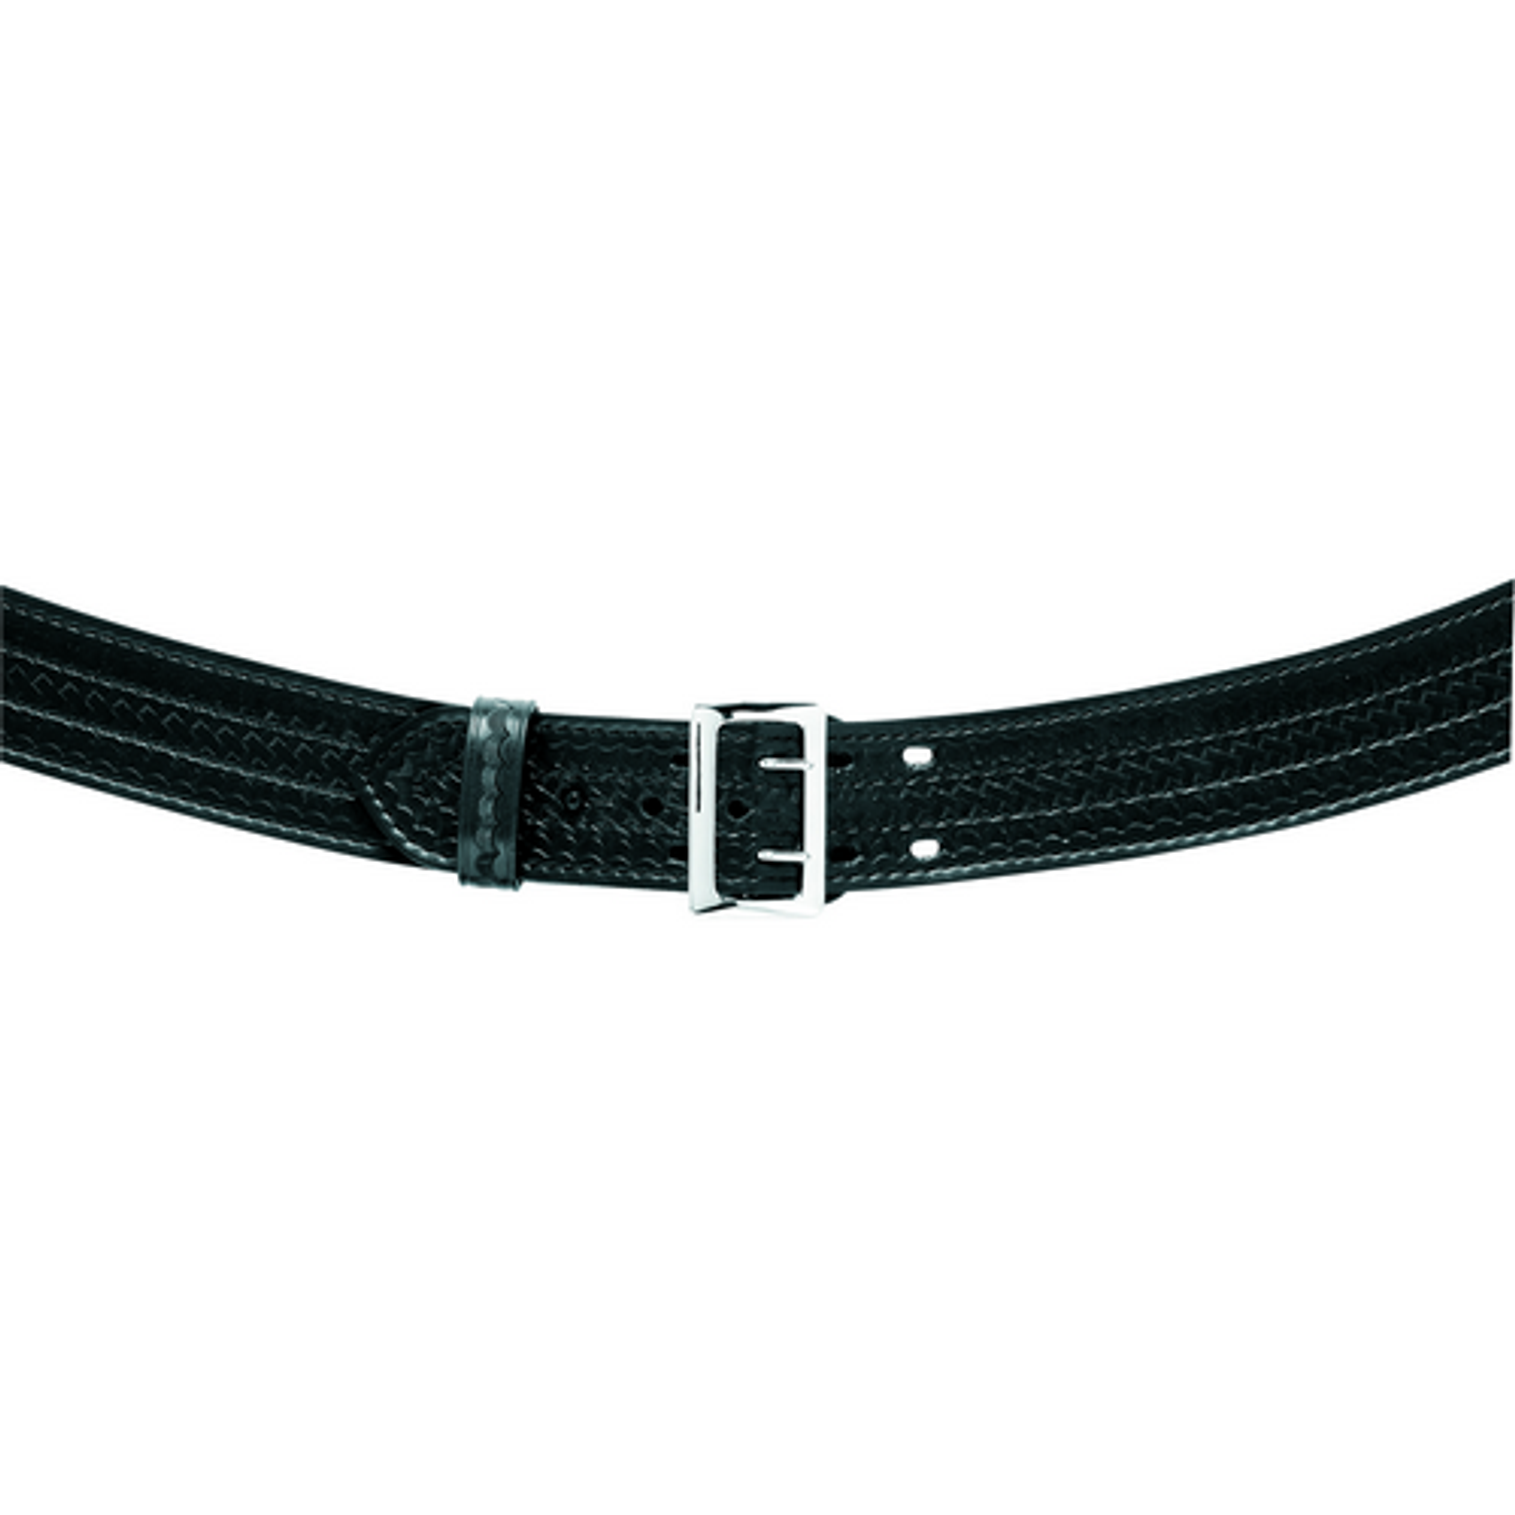 872 - Contoured Duty Belt, Suede Lined, 2.25 (58mm) - KR872-30-6